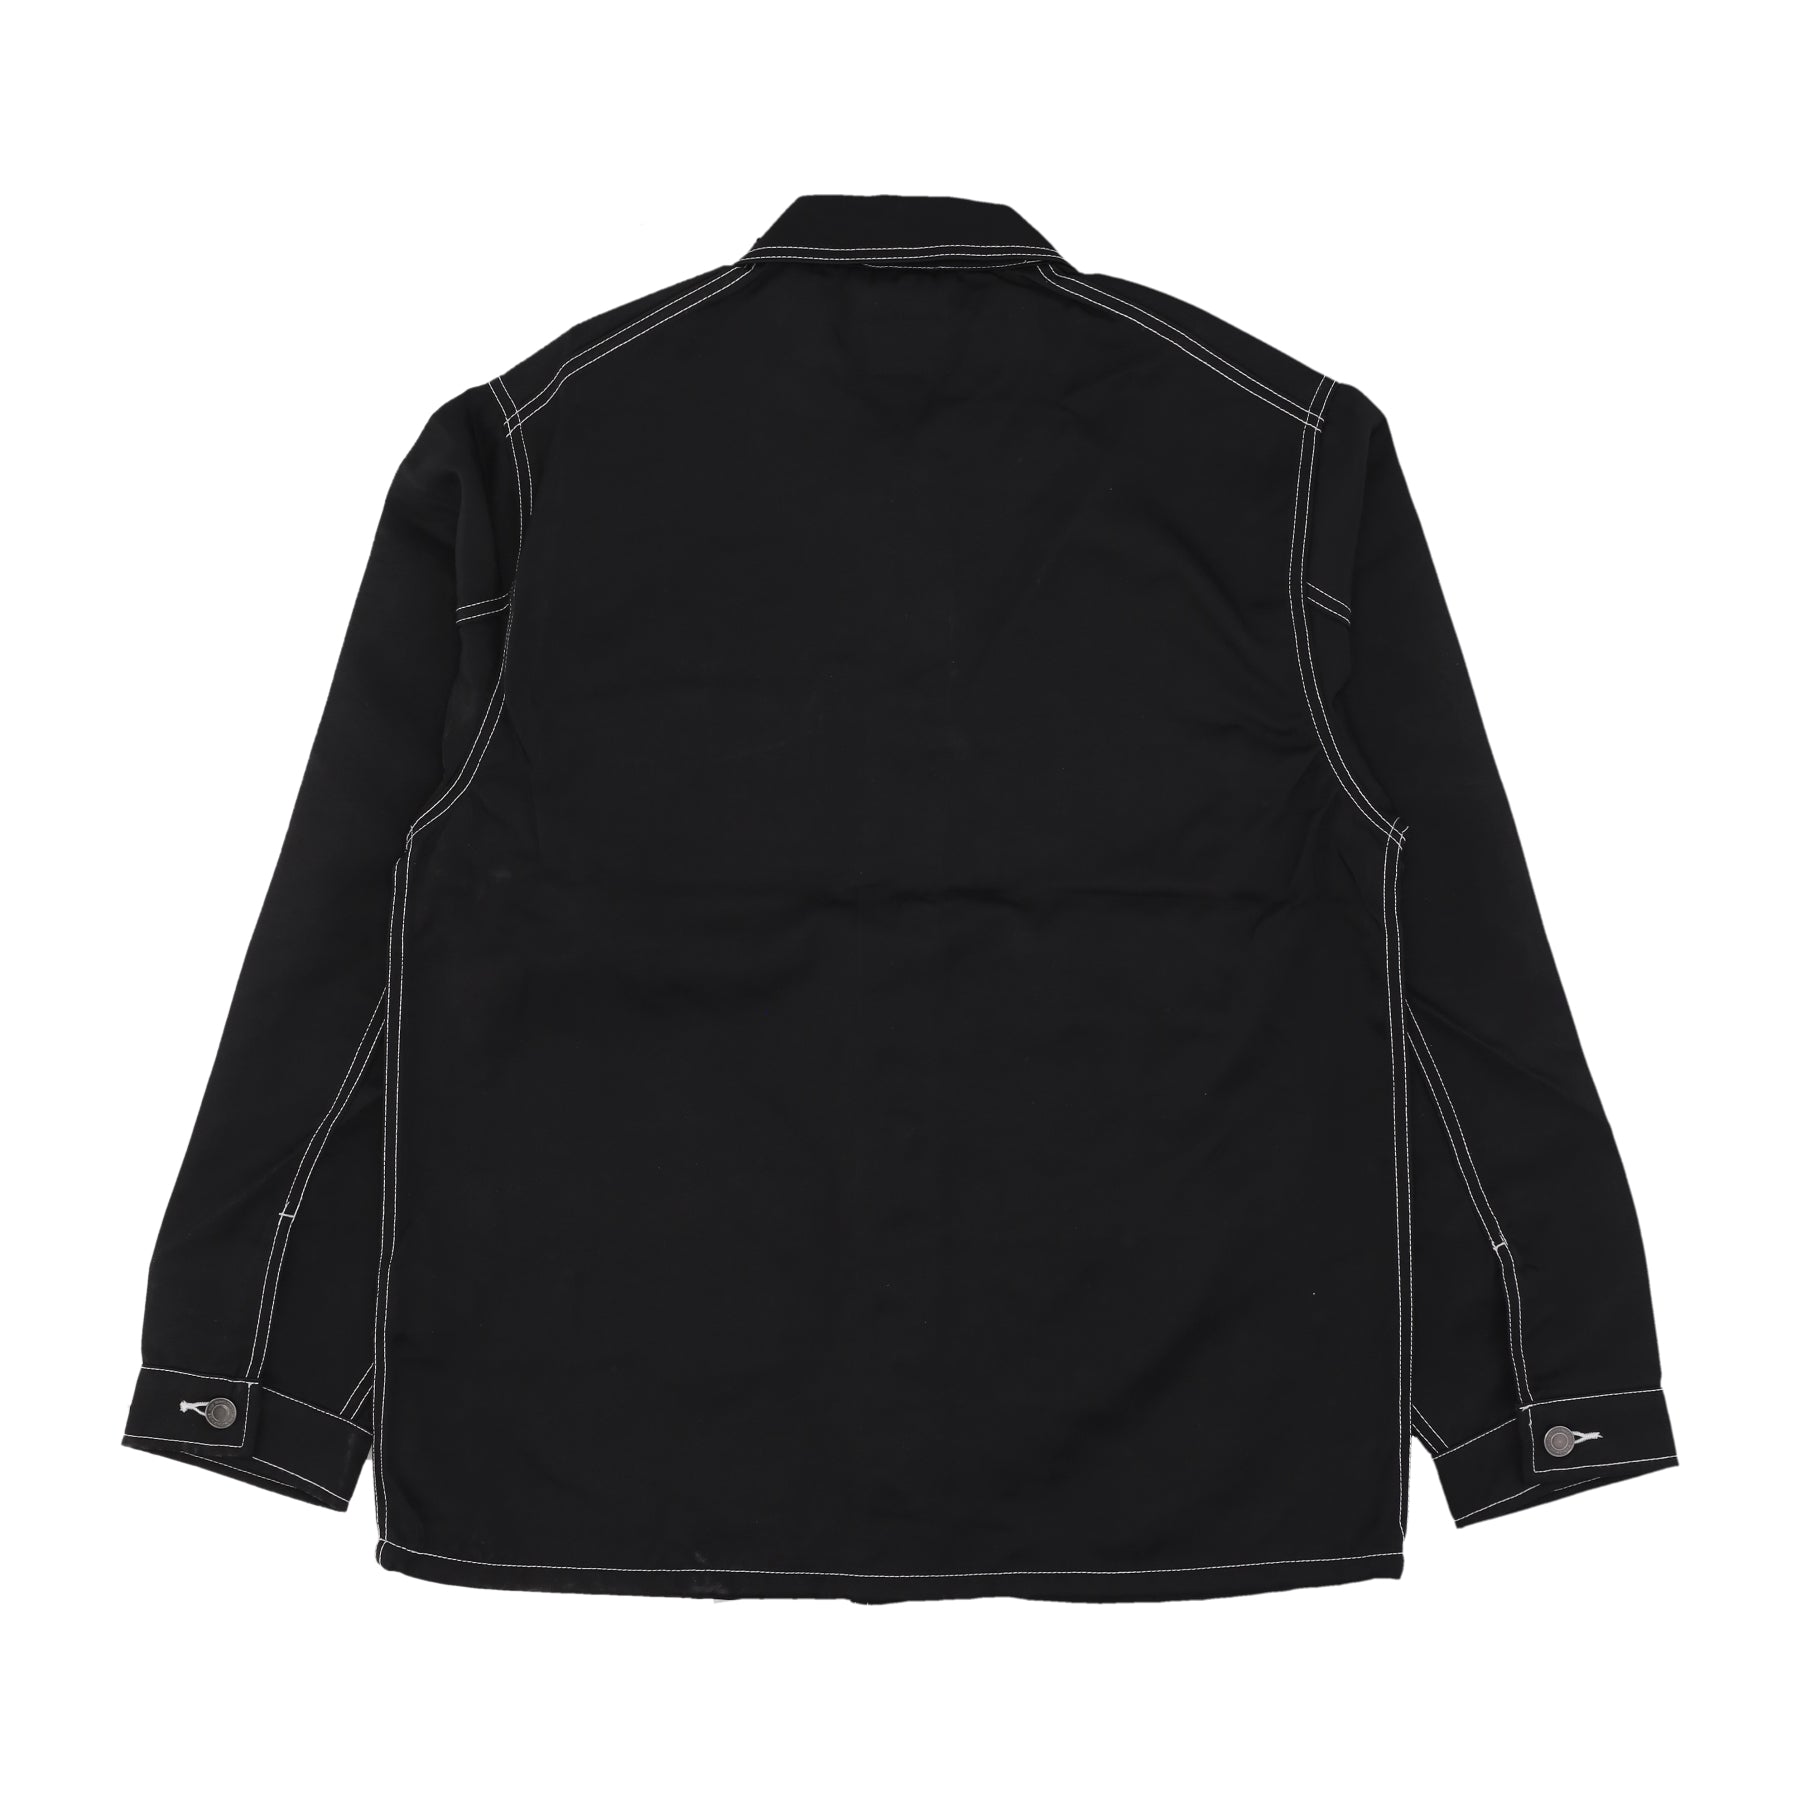 Giacca Workwear Uomo Contrast Nylon Chore Jacket Cream JK00425